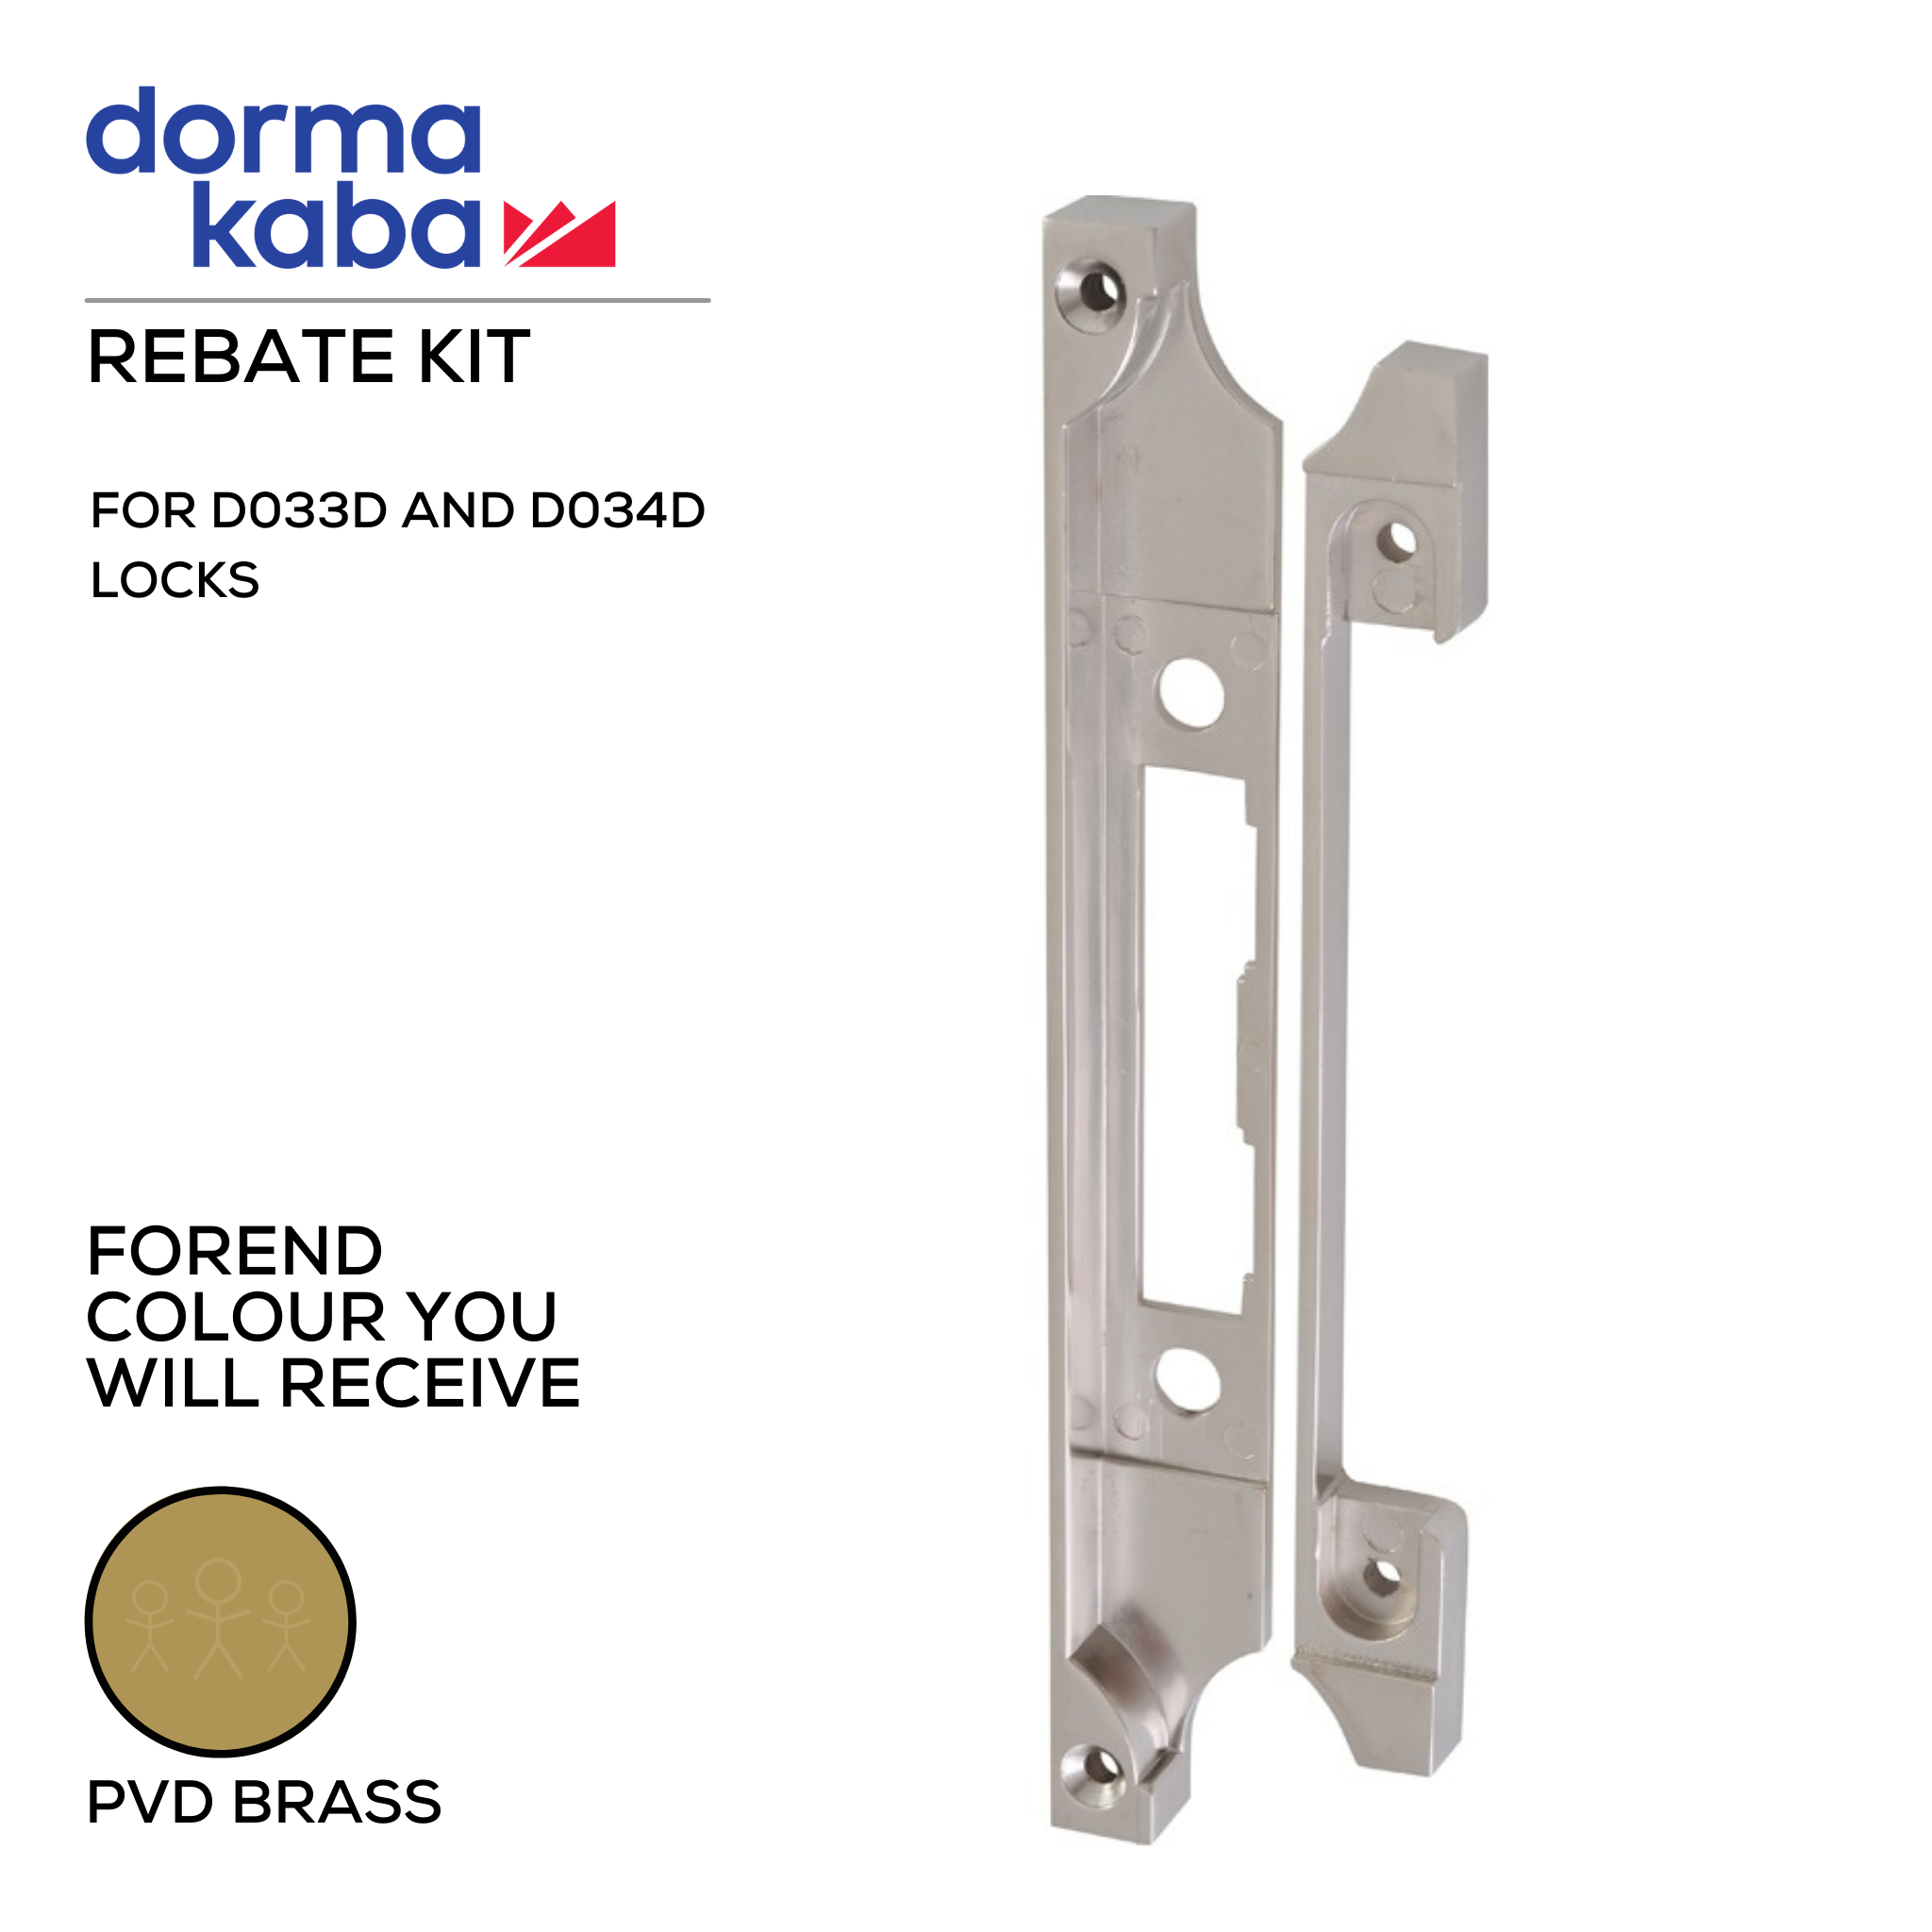 D039R Brass PVD, Rebate Kit, for D033D and D034S Locks, PVD Brass, DORMAKABA